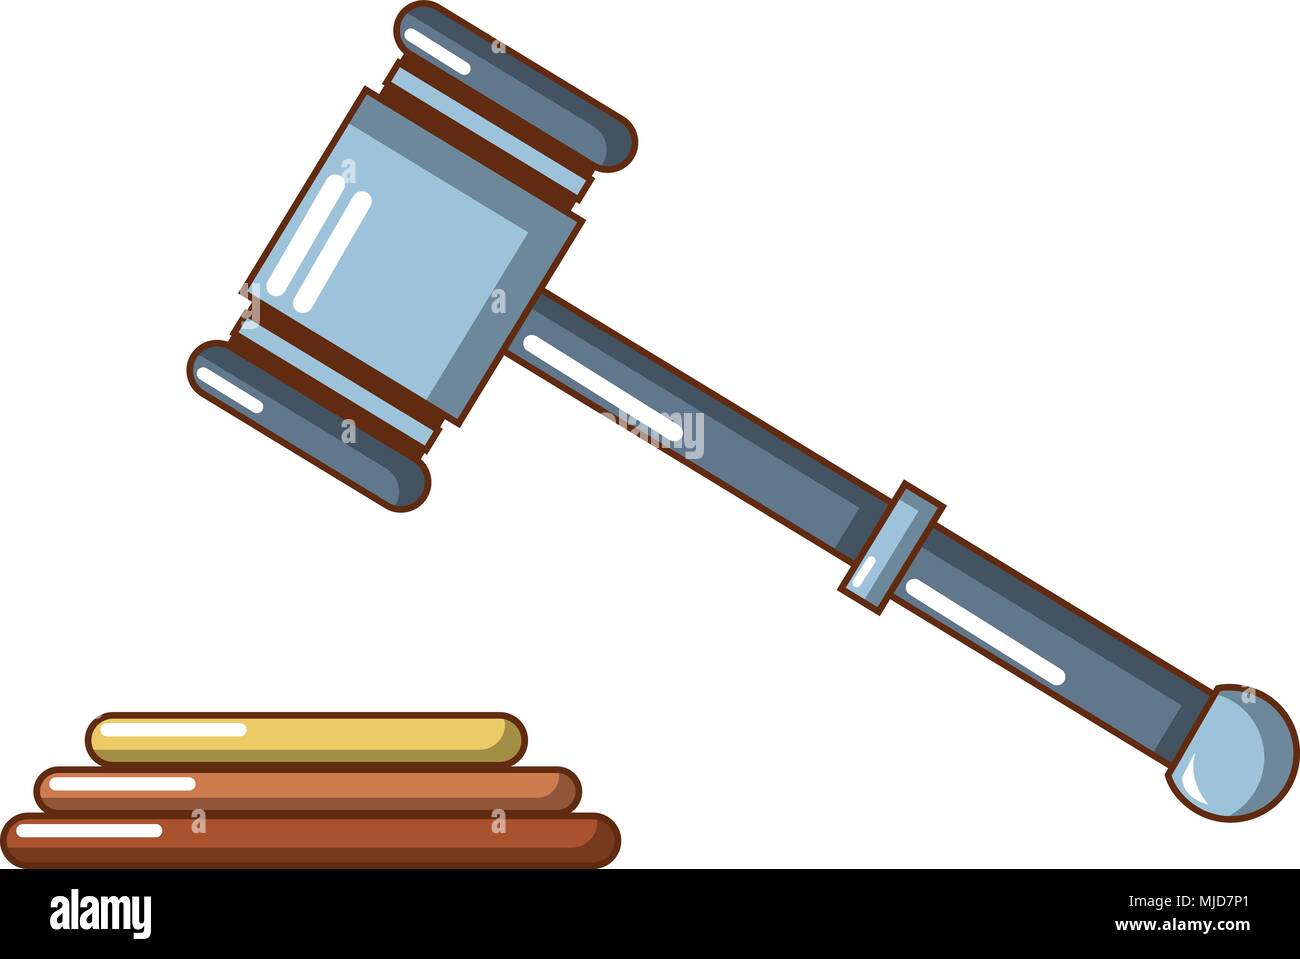 Judge Court Law Cartoon Stock Photos & Judge Court Law Cartoon Stock